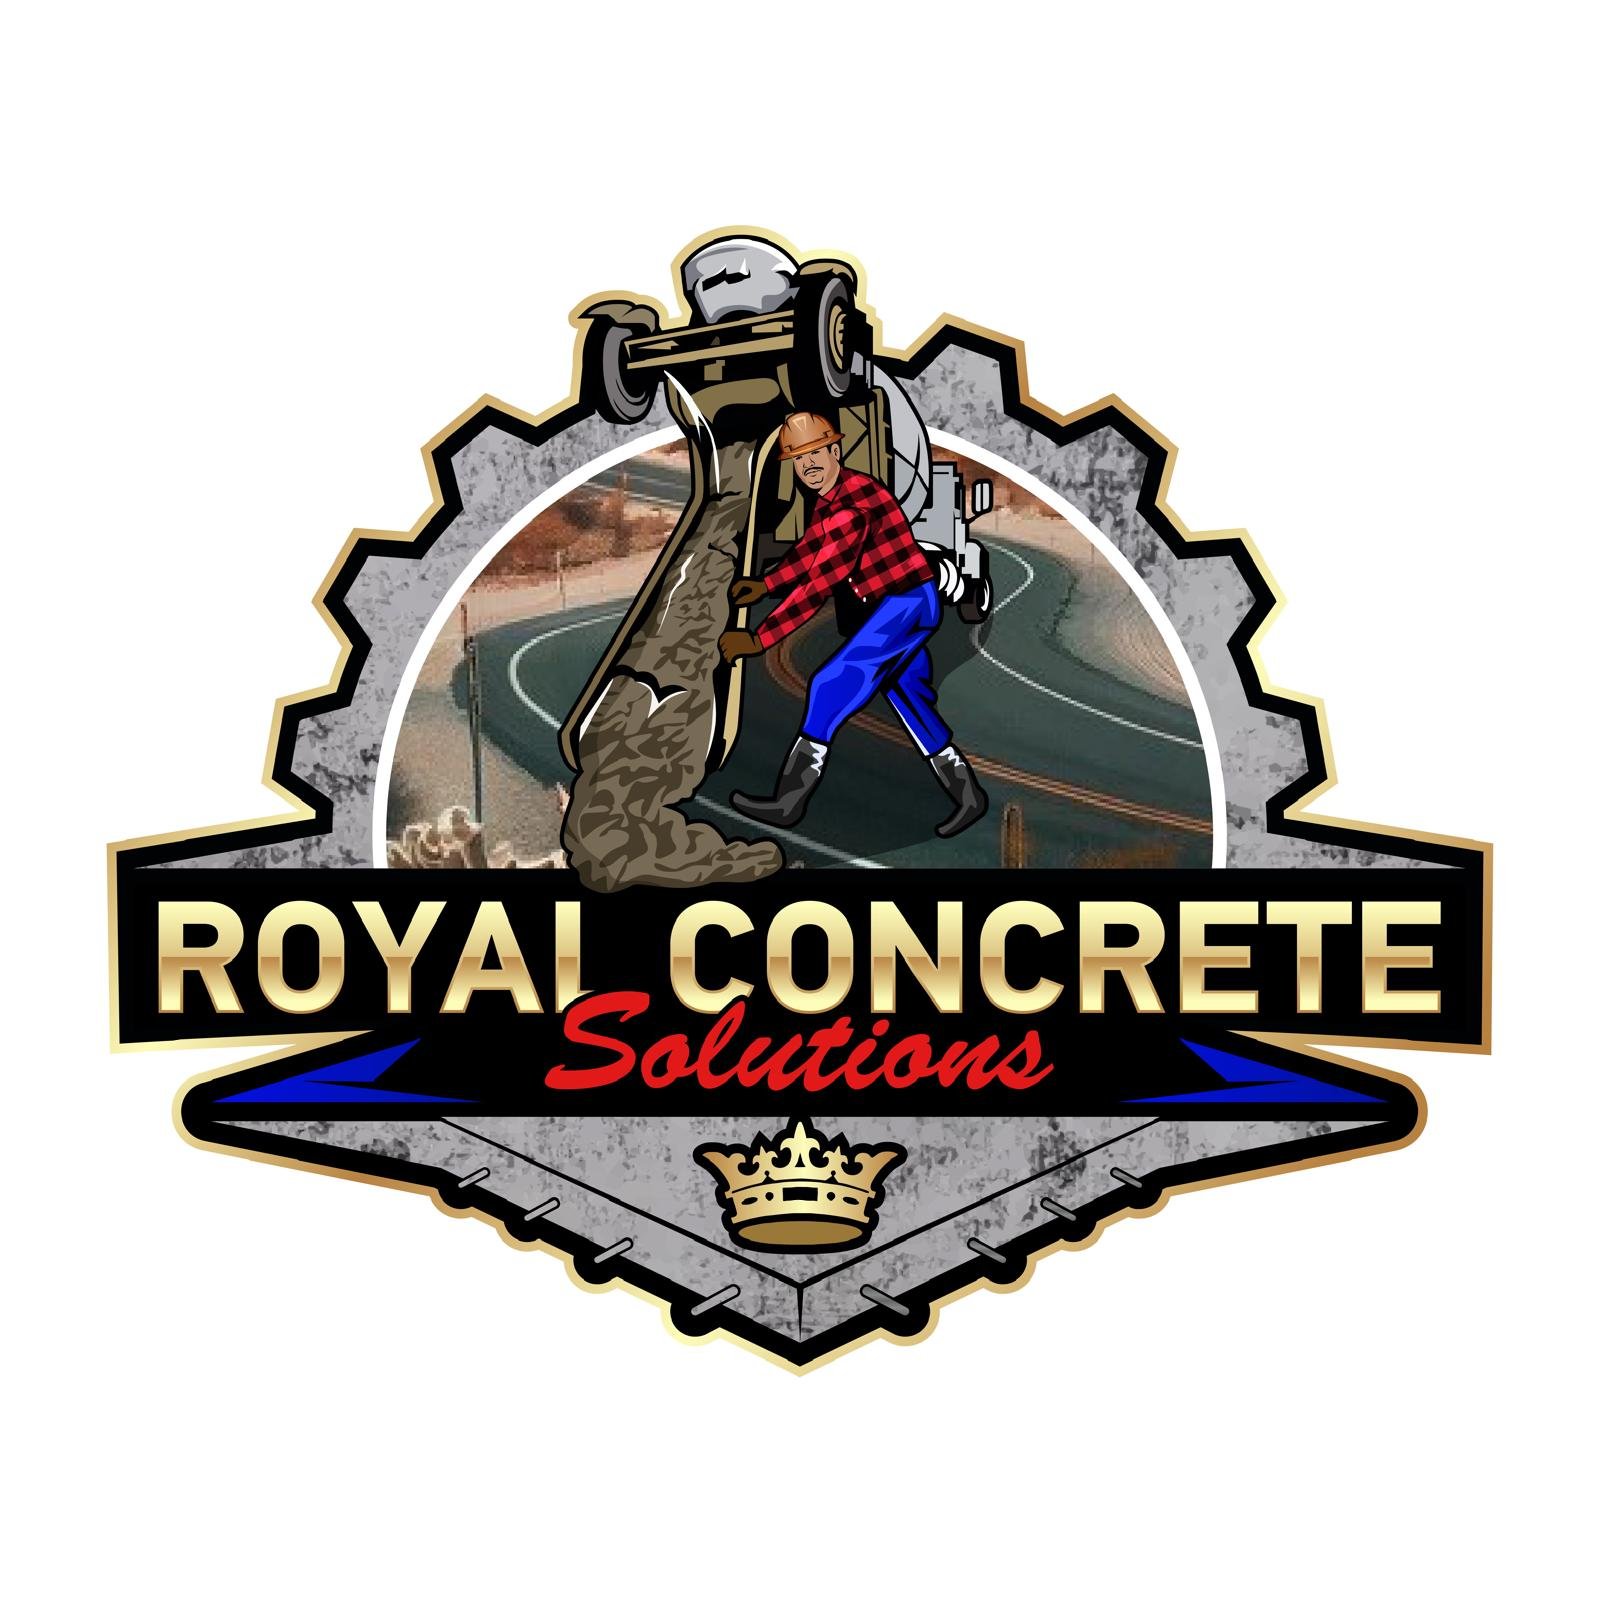 Royal Concrete Solutions.jpg